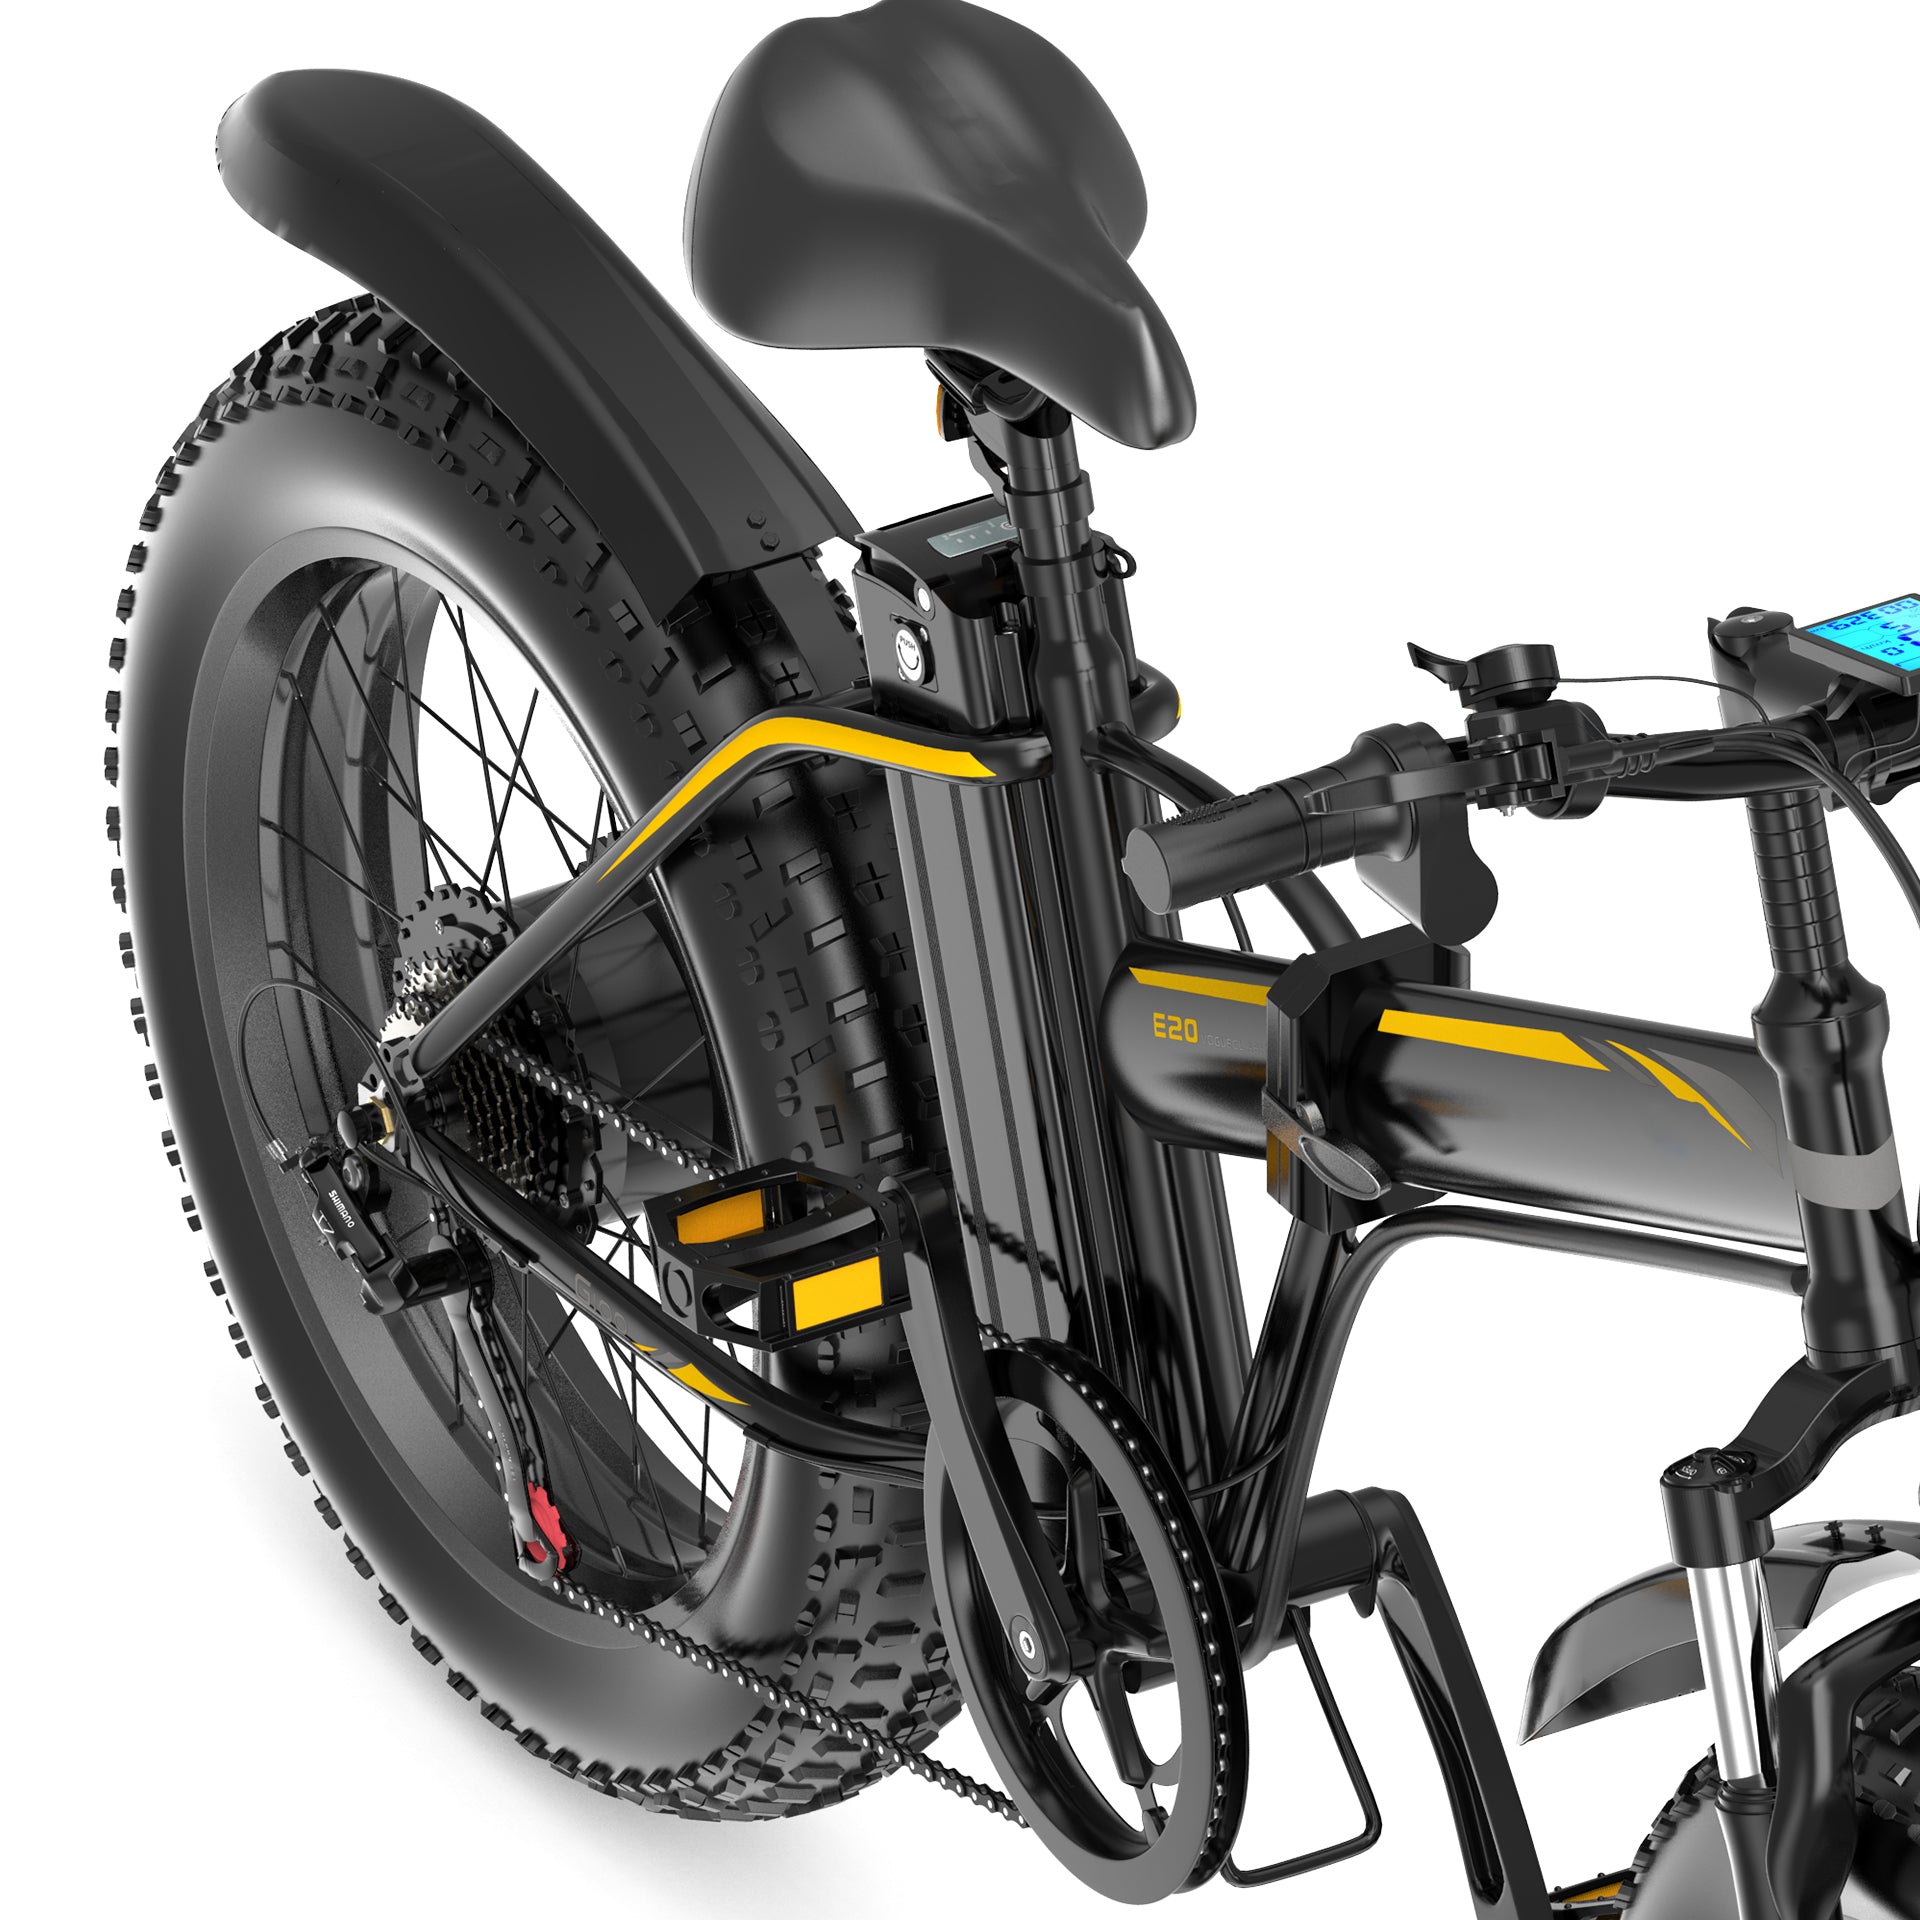 2Pairs Bike Bremsen Set Komplett Legierung Fahrrad Mountainbike